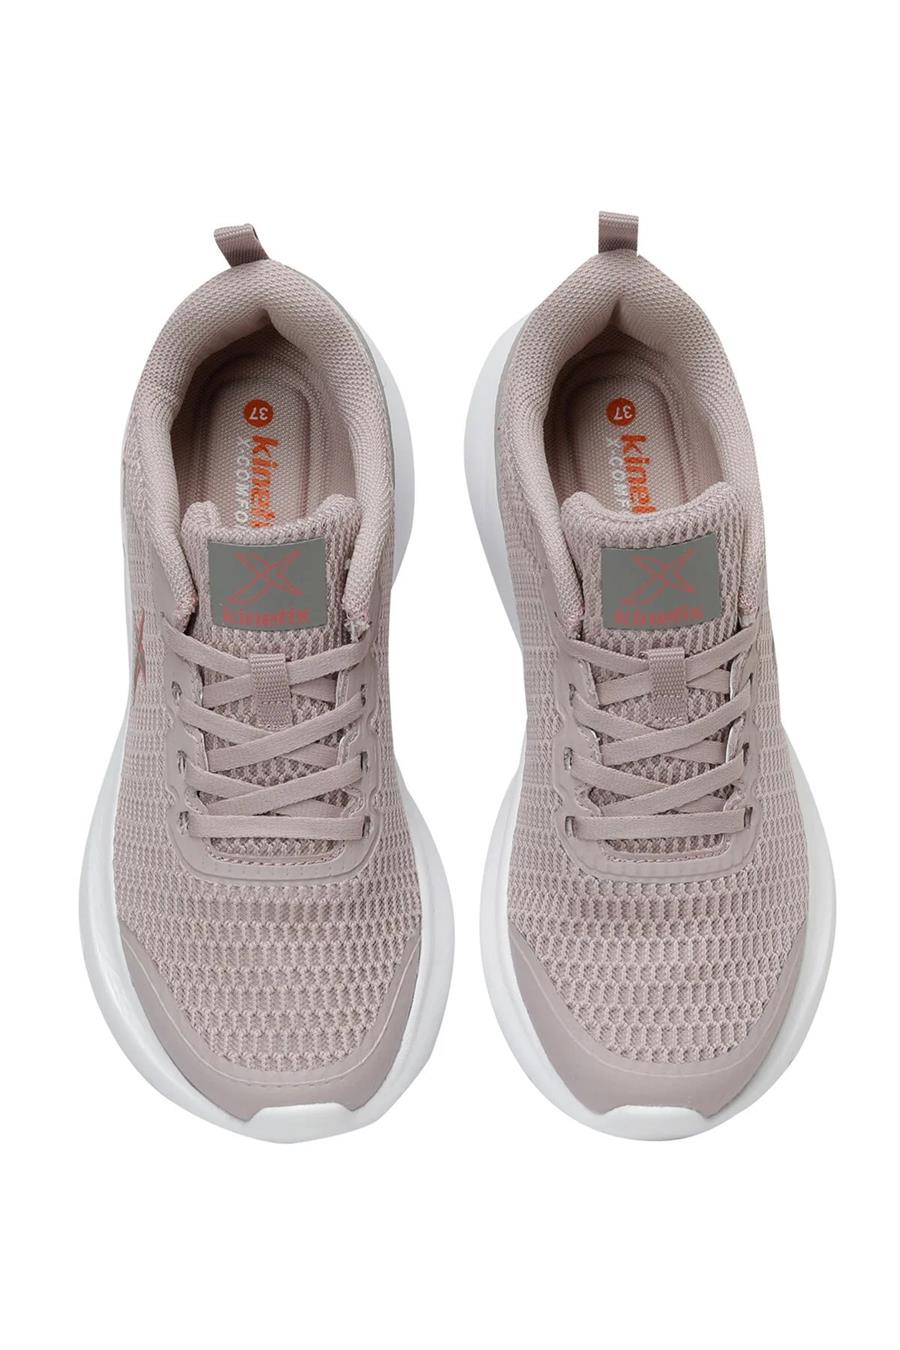 Kinetix Craw Tx W 3Fx Pembe Beyaz Kadın Sneaker Ayakkabı